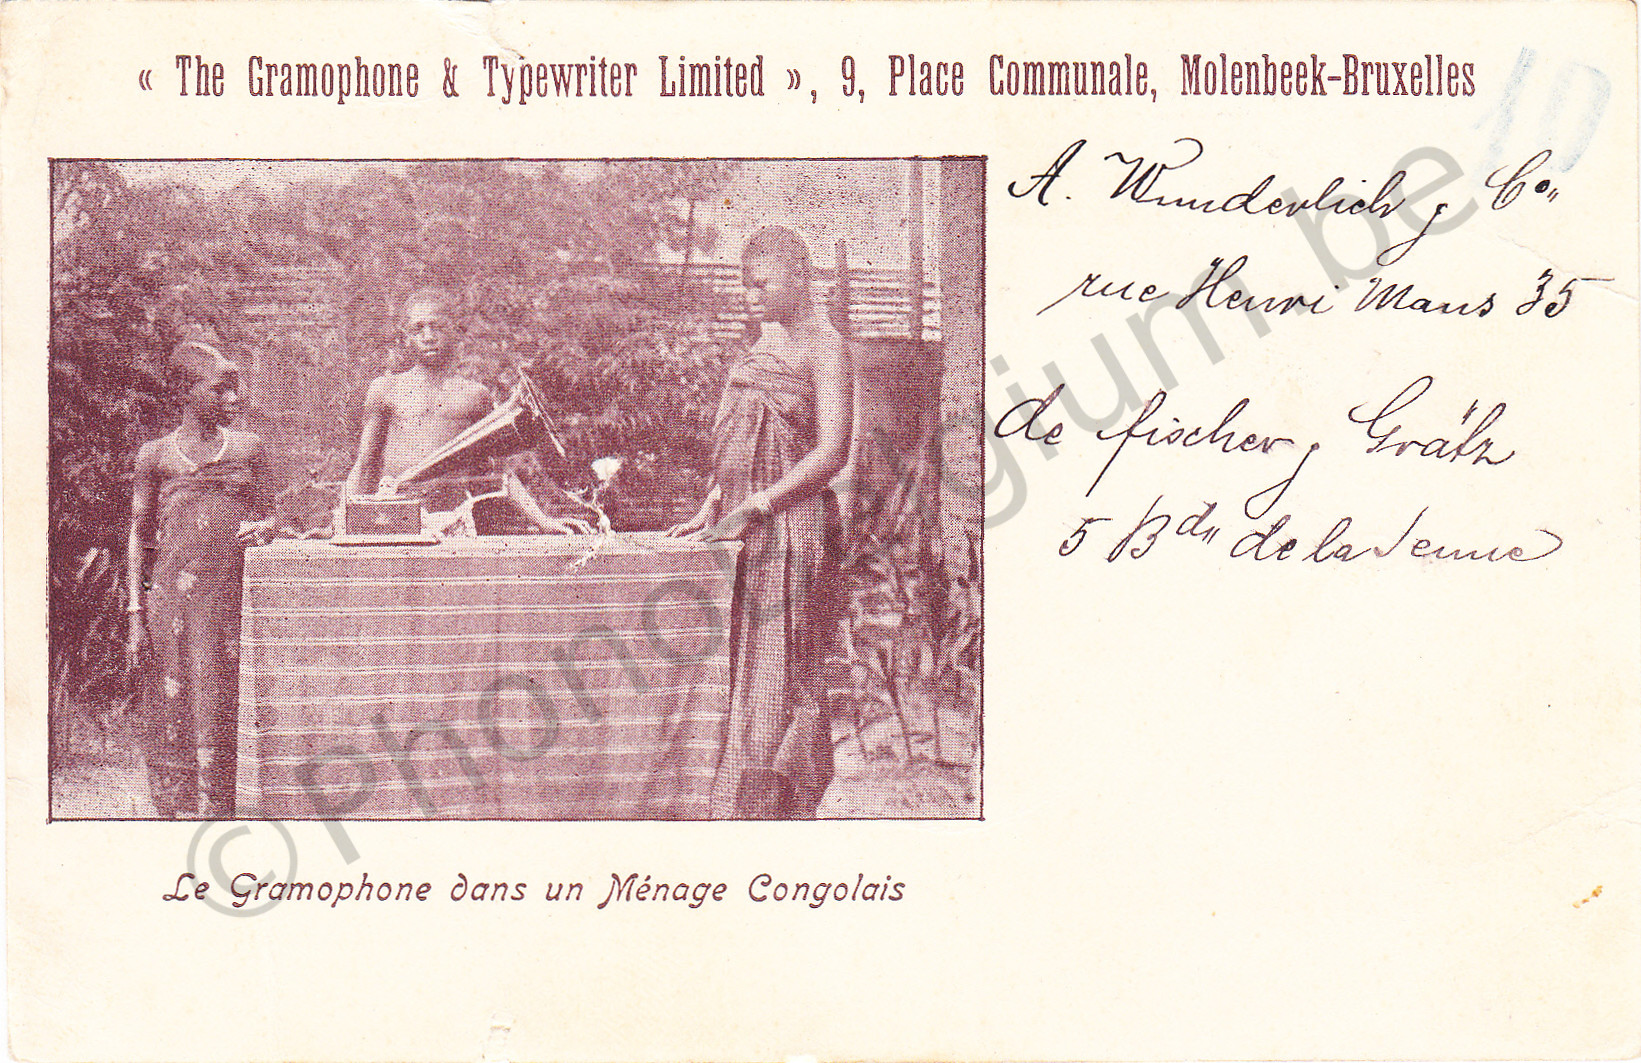 The Gramophone & Typewriter Limited, 9, Place Communale, Molenbeek-Bruxelles